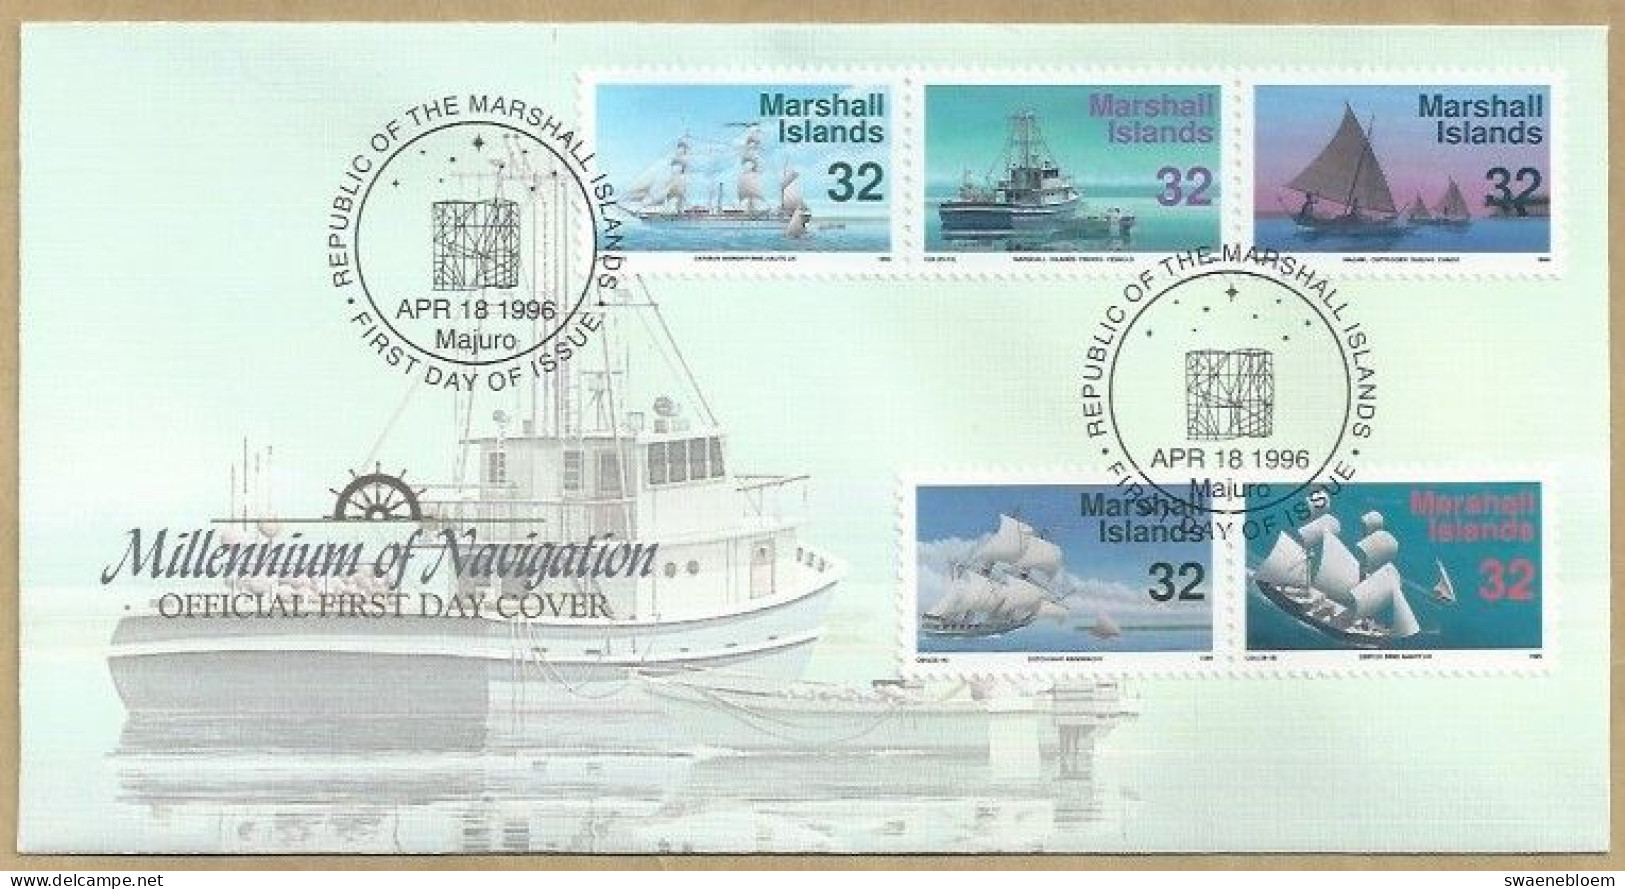 FDC. REPUBLIC OF THE MARSHALL ISLANDS. APR 18 1996 MAJURO. MILLENNIUM OF NAVIGATION. C94.FDC. (3). - Islas Marshall